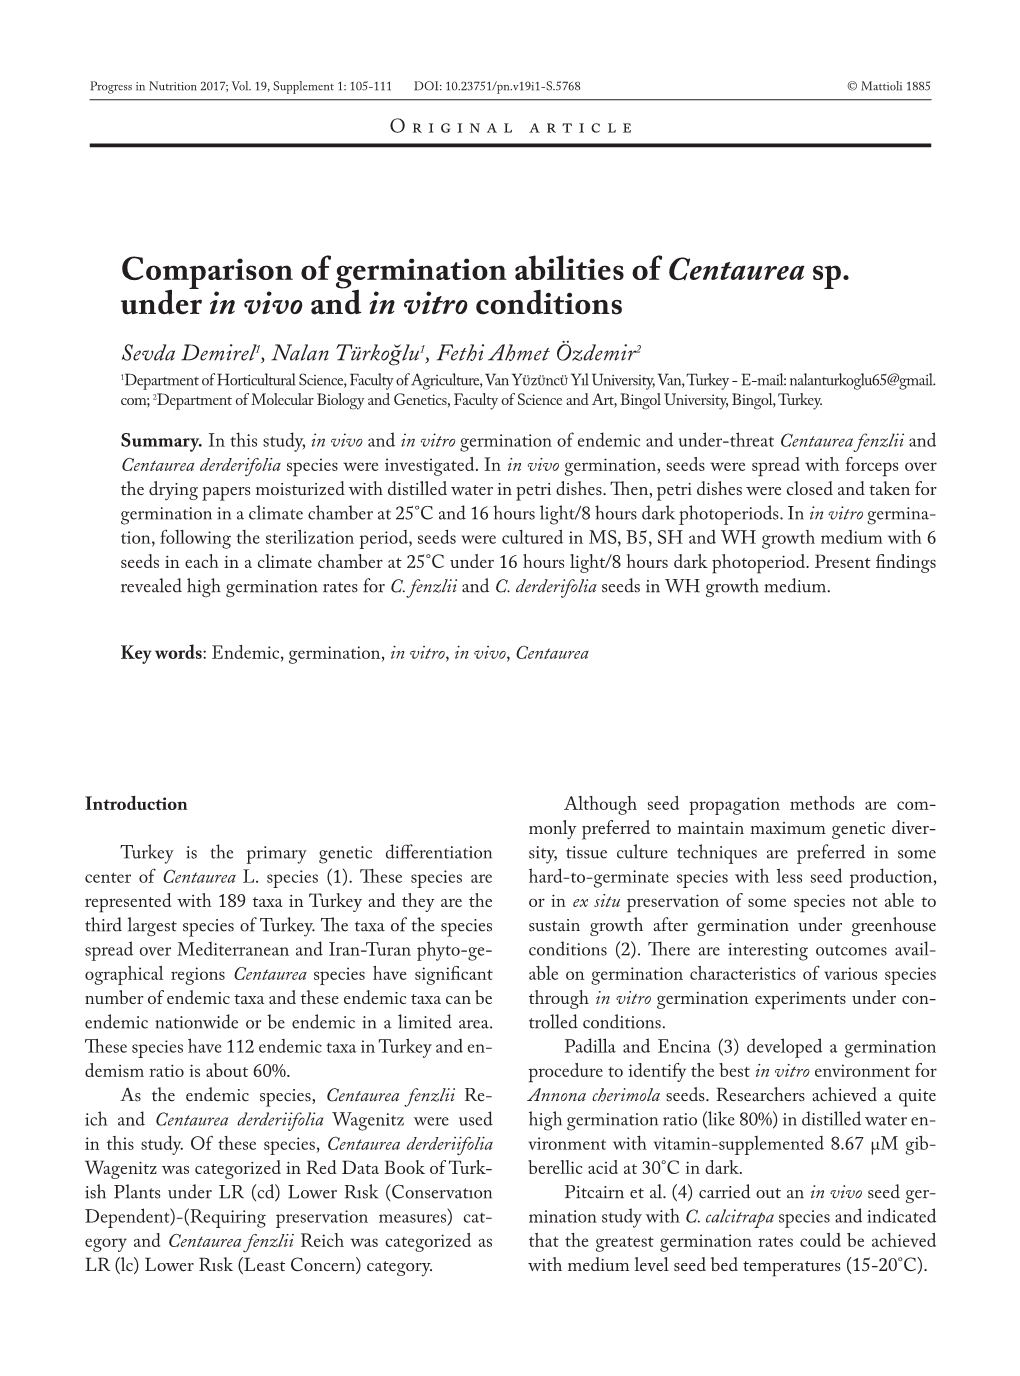 Comparison of Germination Abilities of Centaurea Sp. Under in Vivo and In